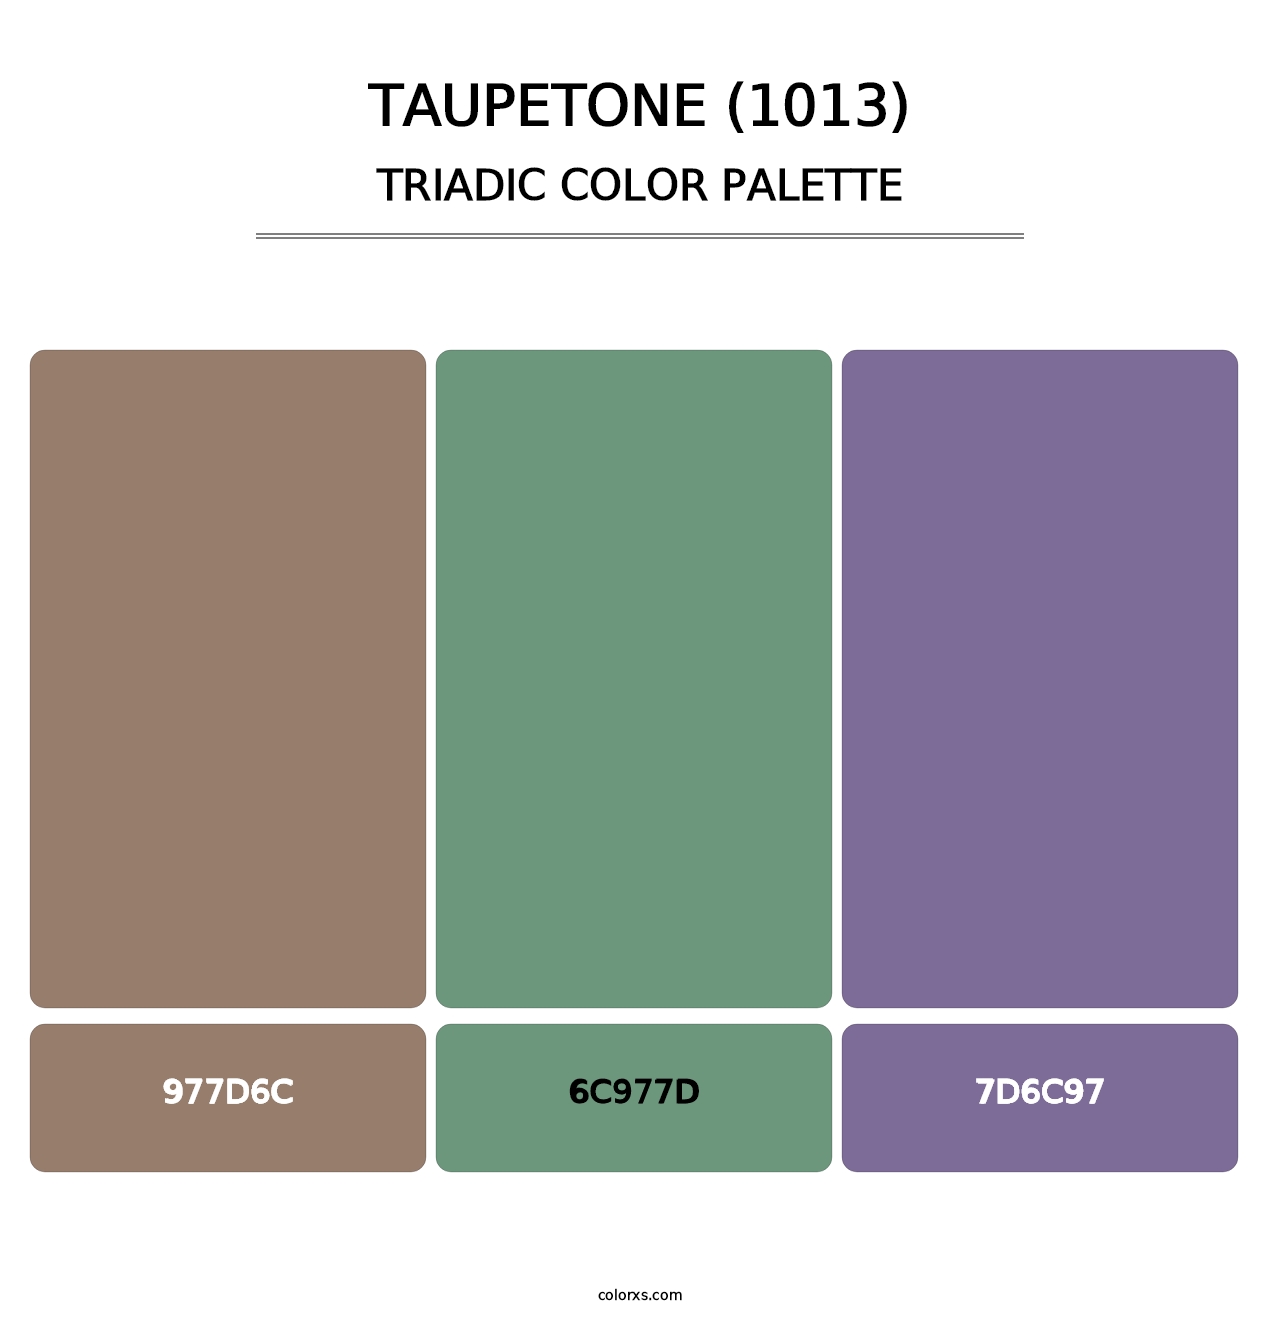 Taupetone (1013) - Triadic Color Palette